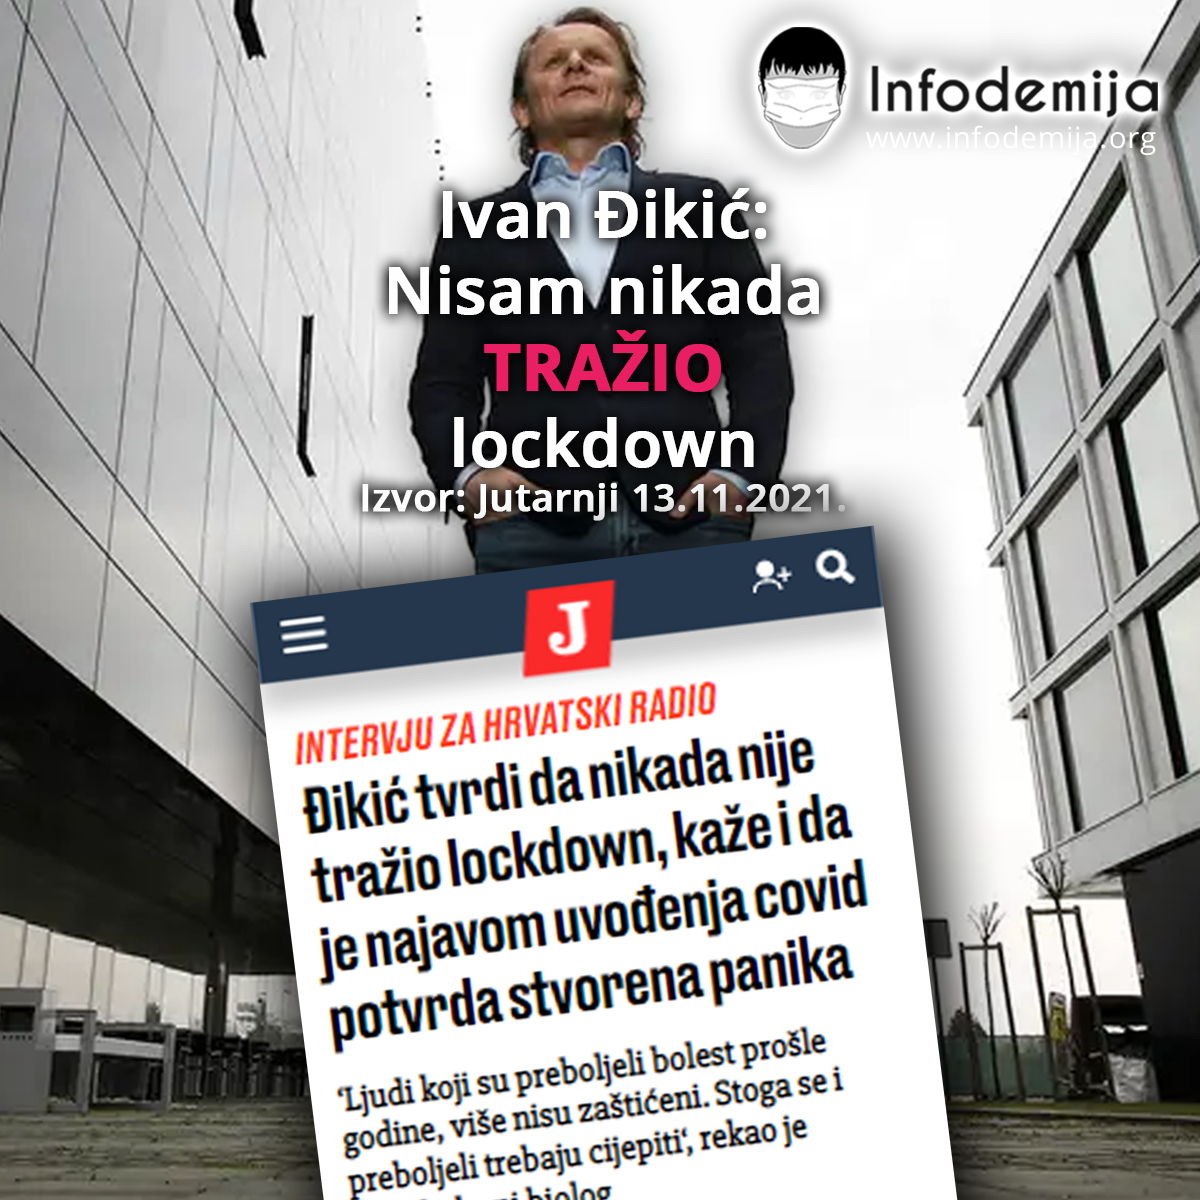 Ivan Đikić - Nisam nikada tražio lockdown